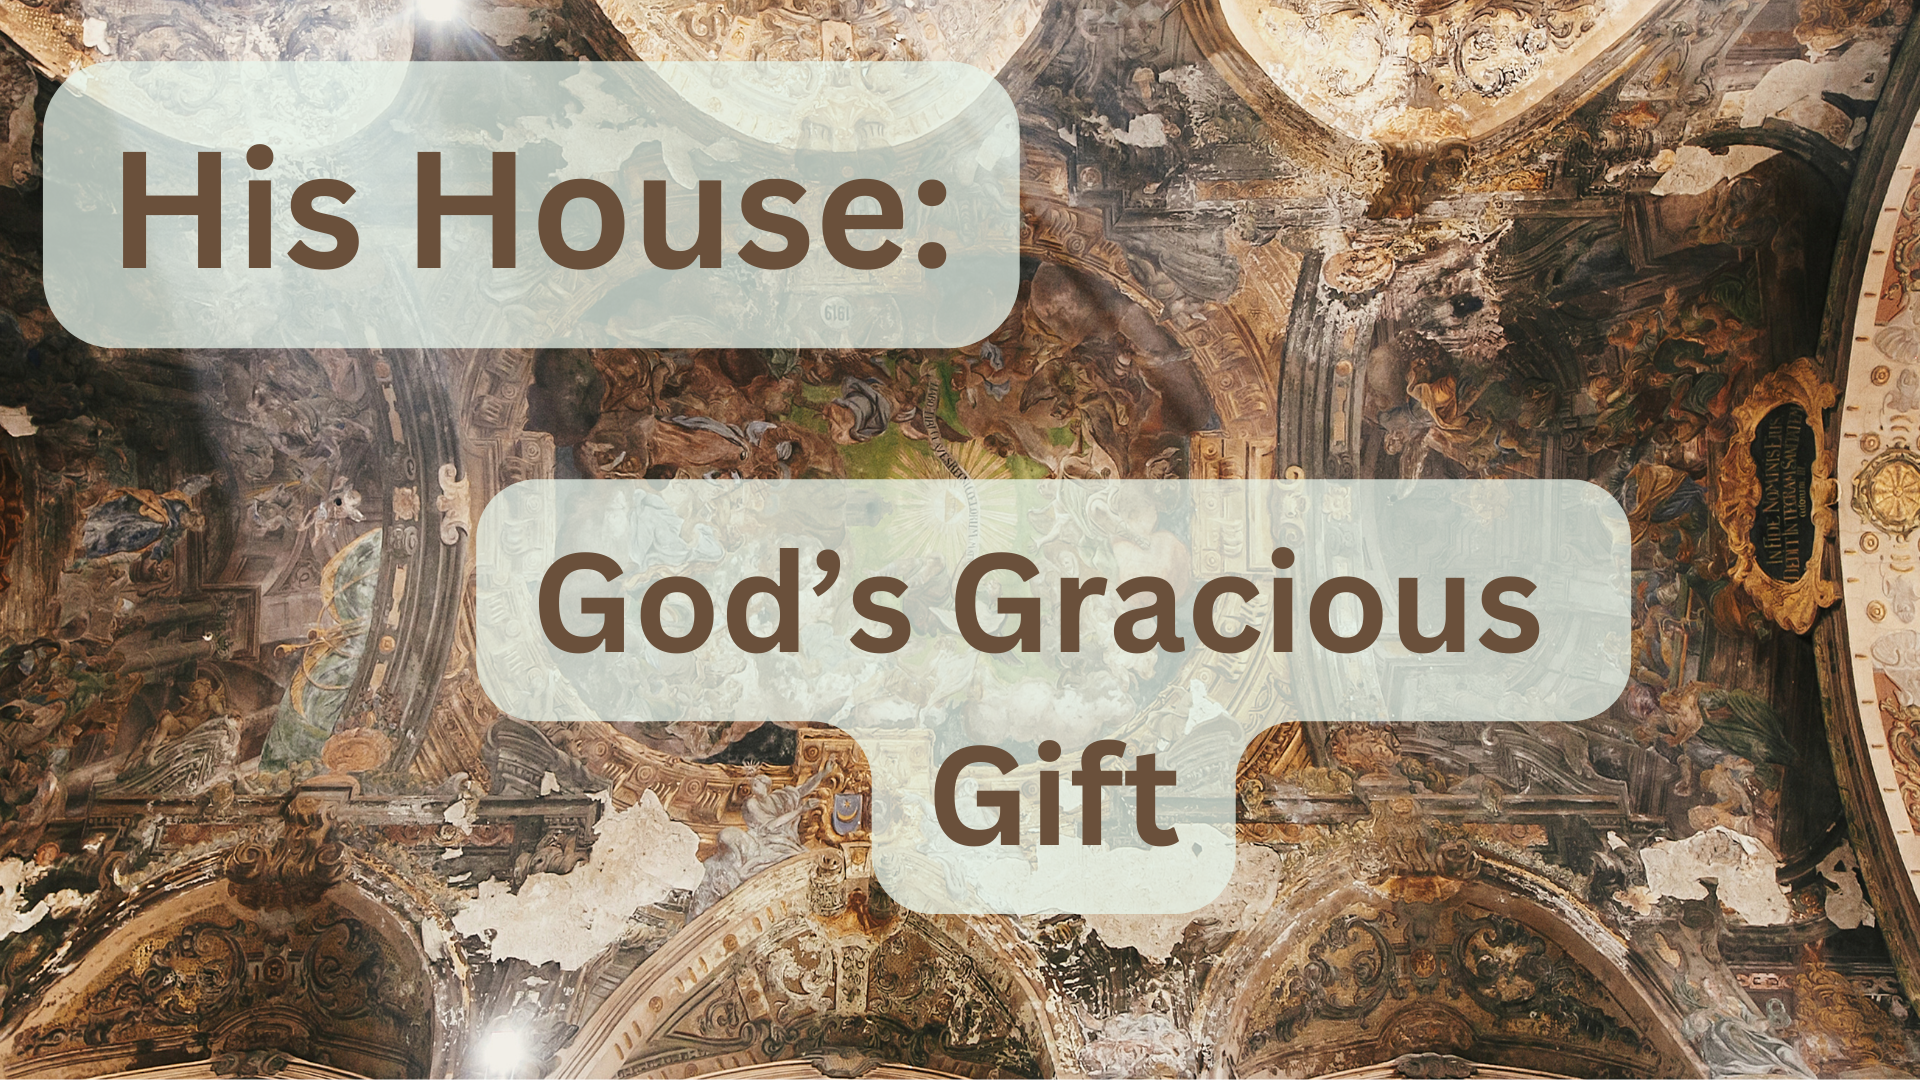 His House: God’s Gracious Gift